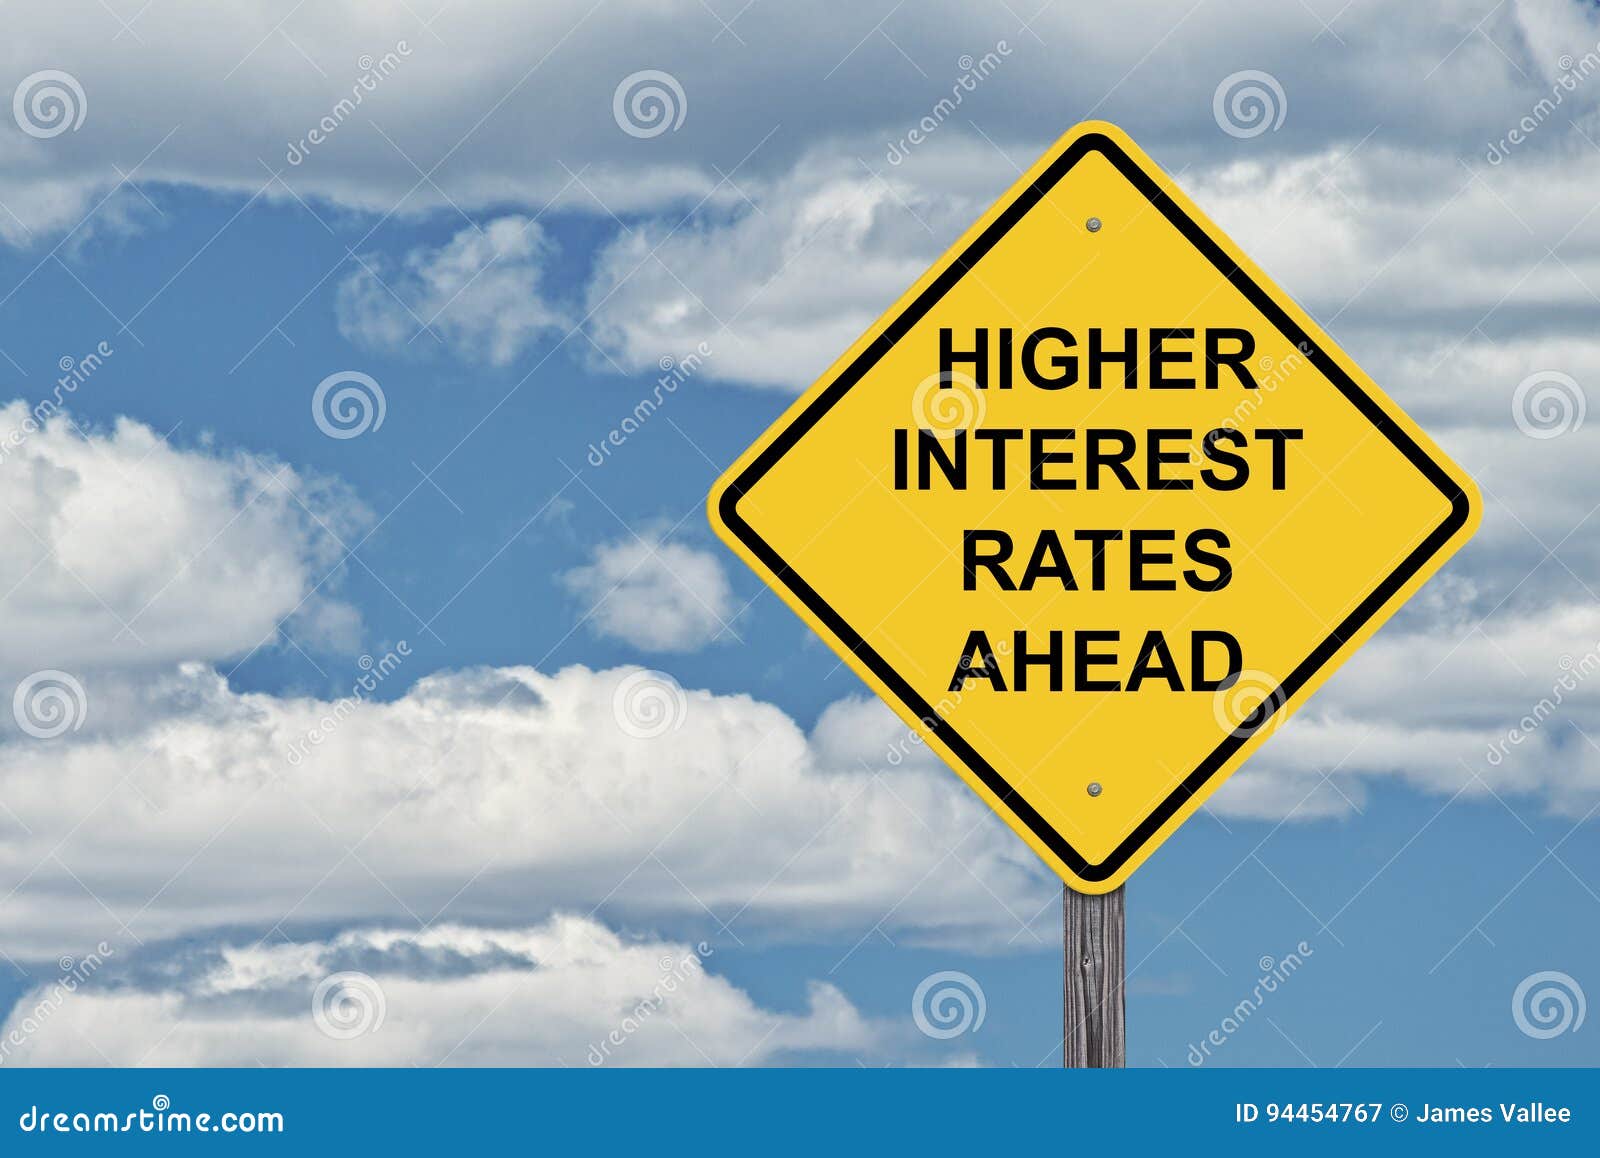 caution sign blue sky - higher interest rates